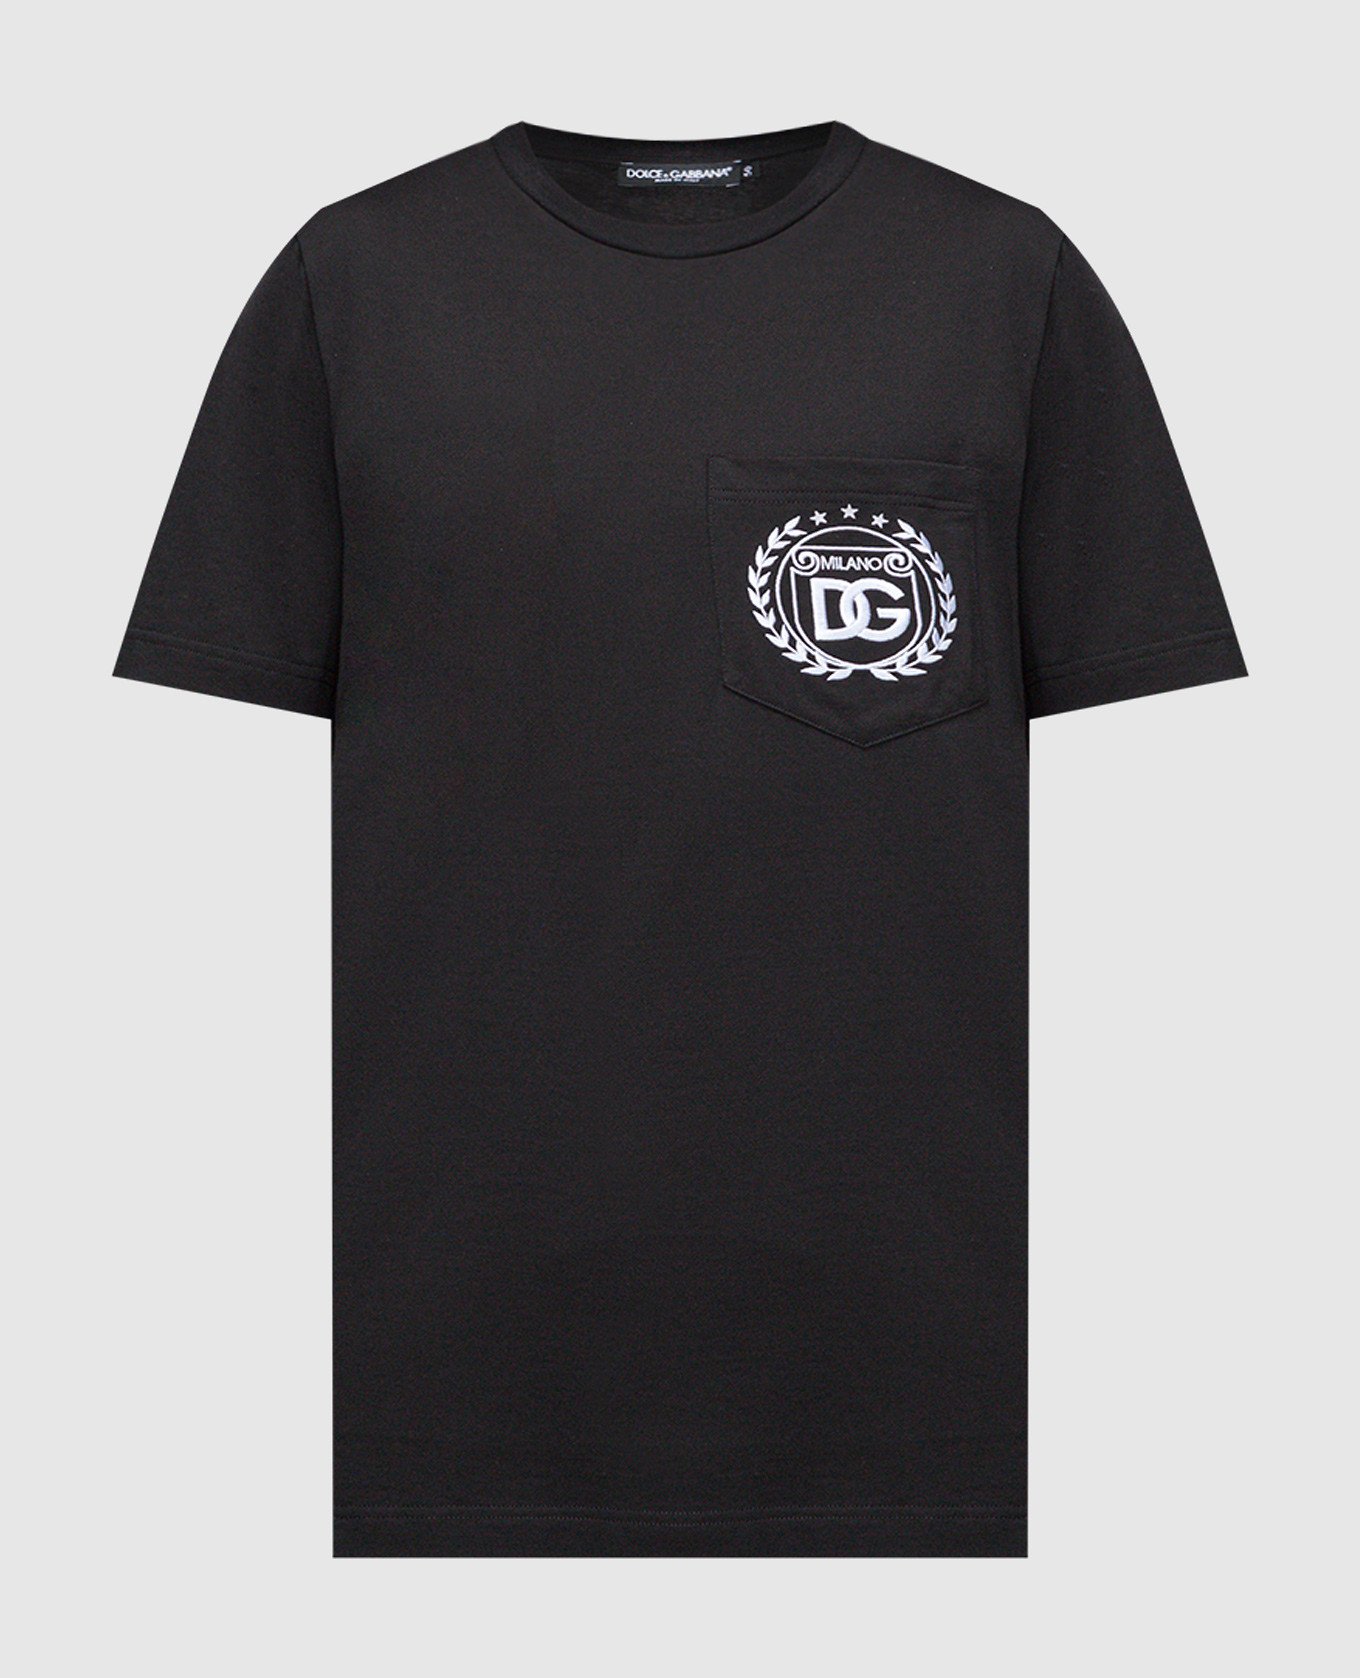 Black t-shirt with logo